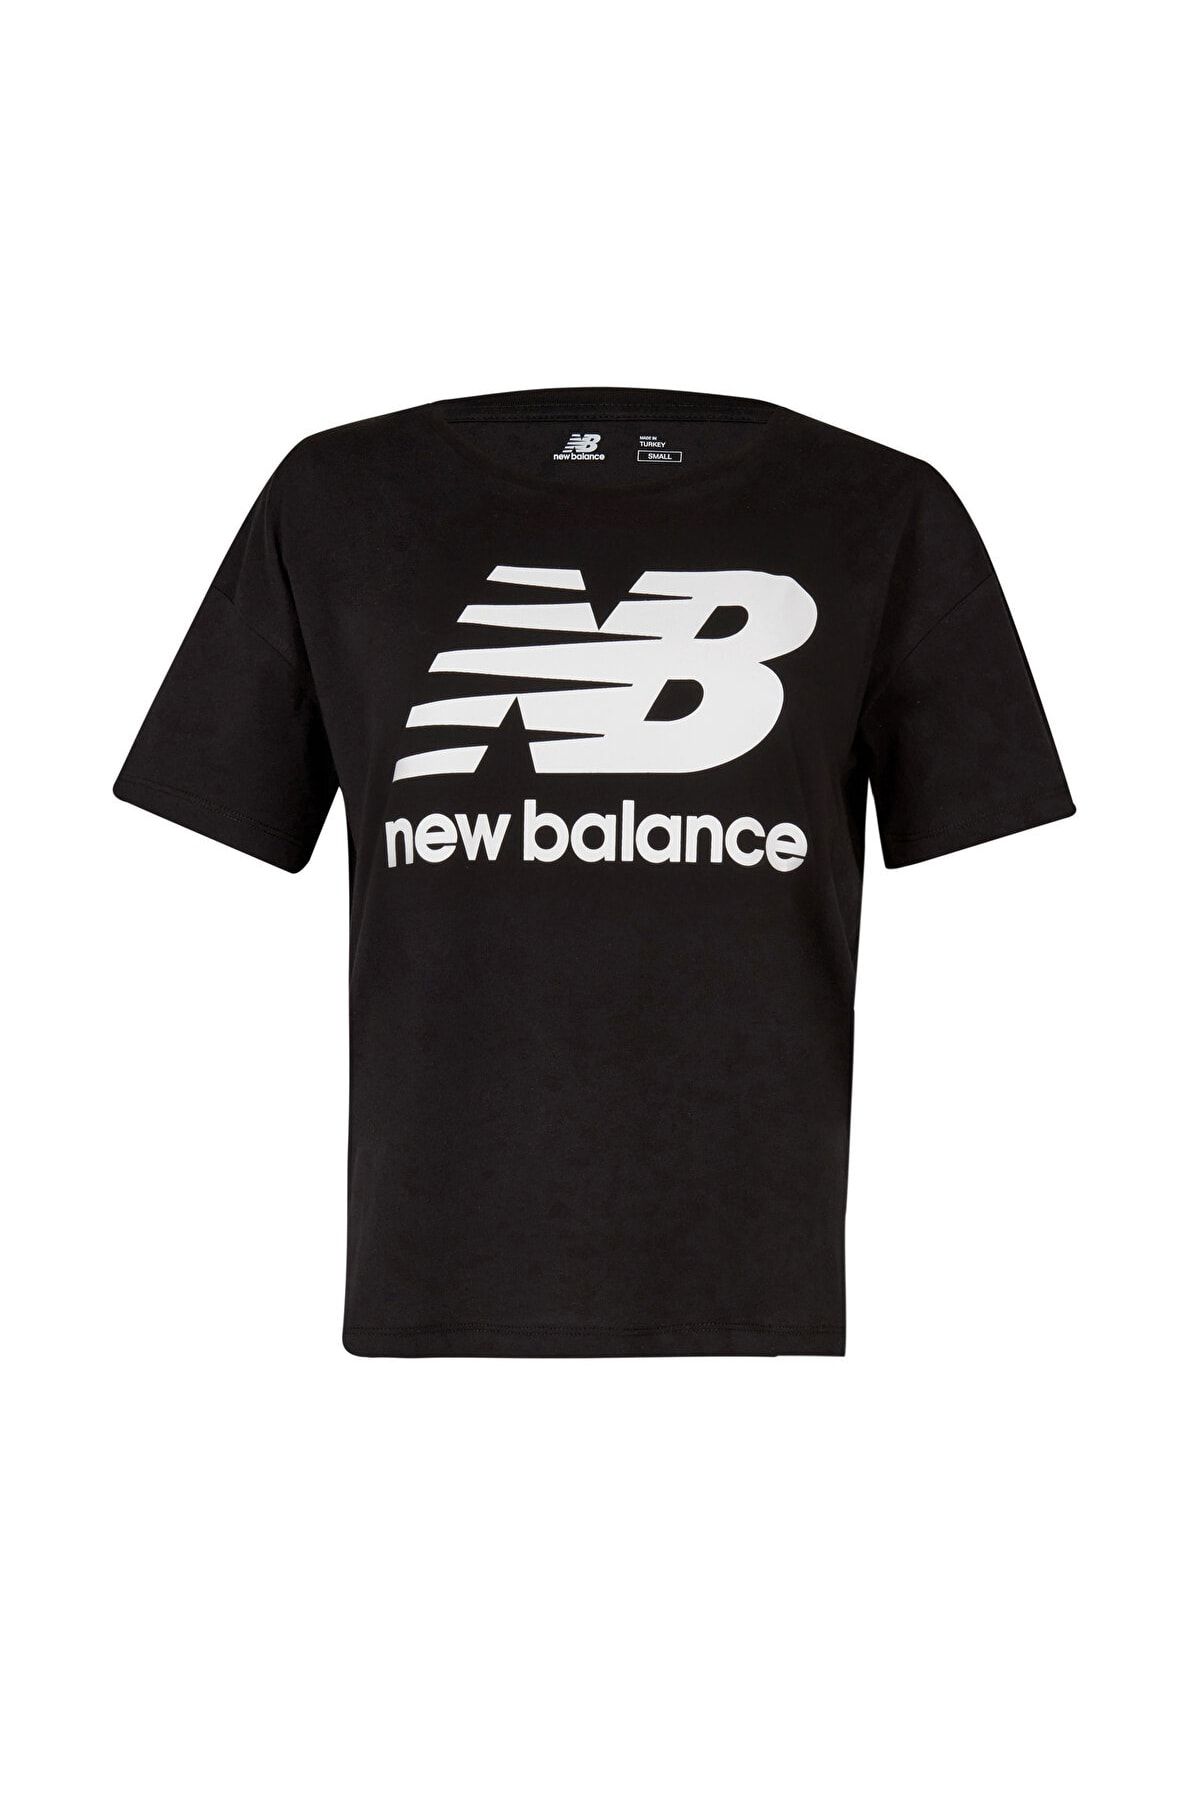 New Balance Wnt1203